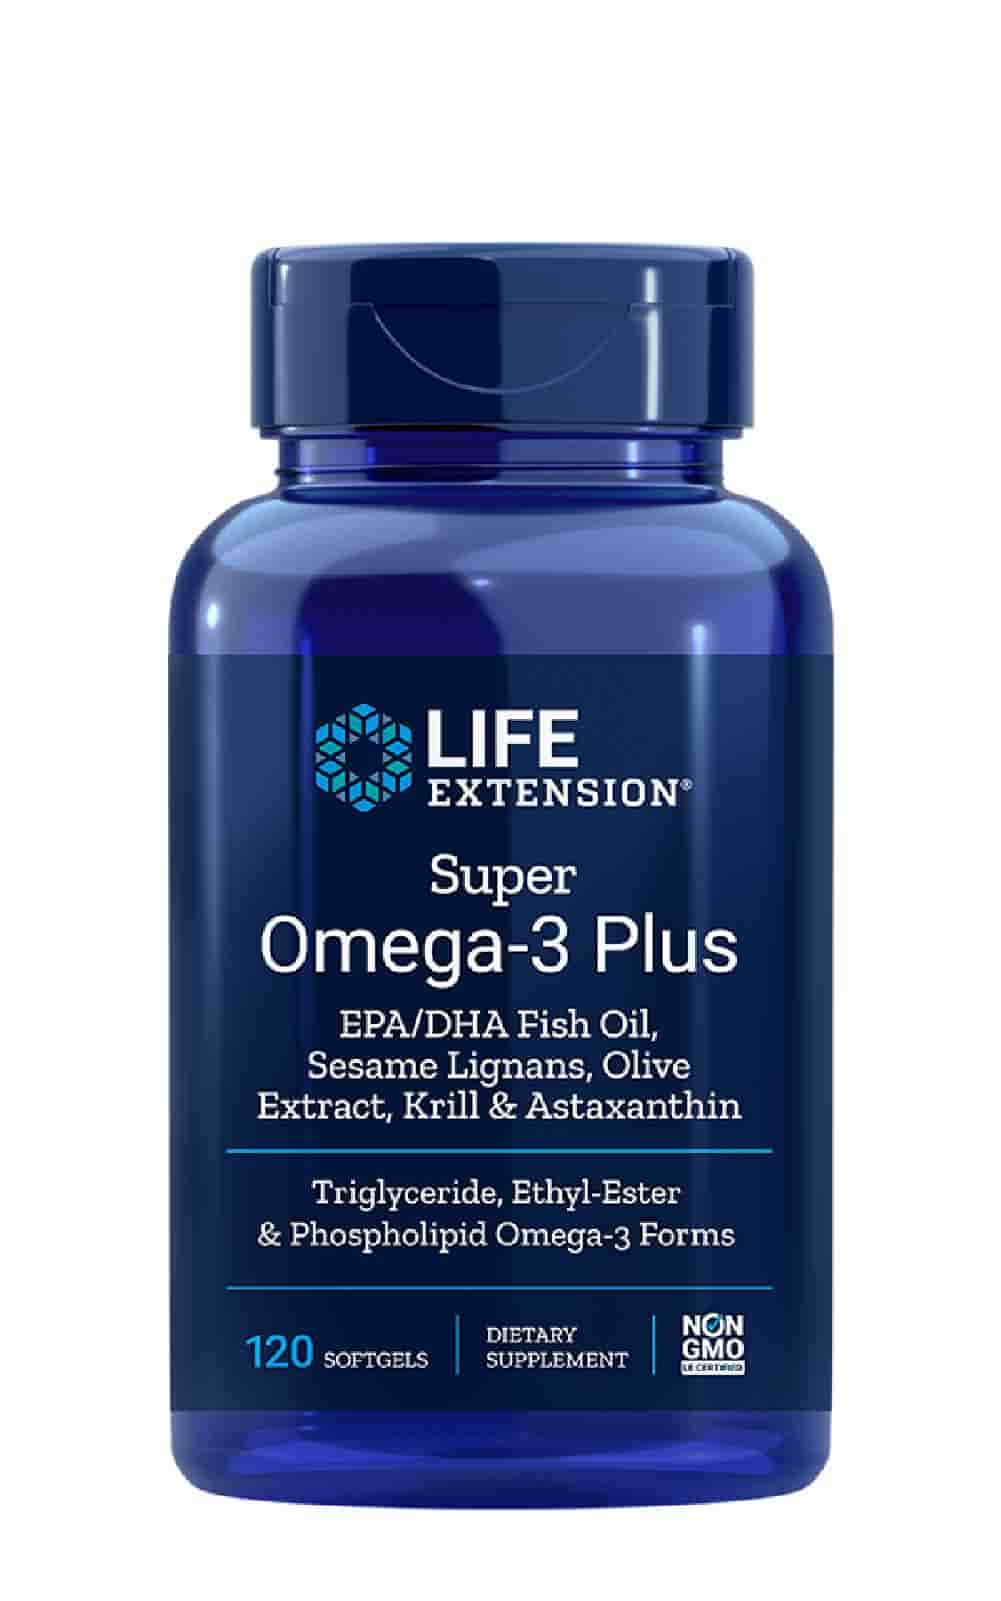 Buy Life Extension Super Omega-3 Plus EPA/DHA Fish Oil at LiveHelfi